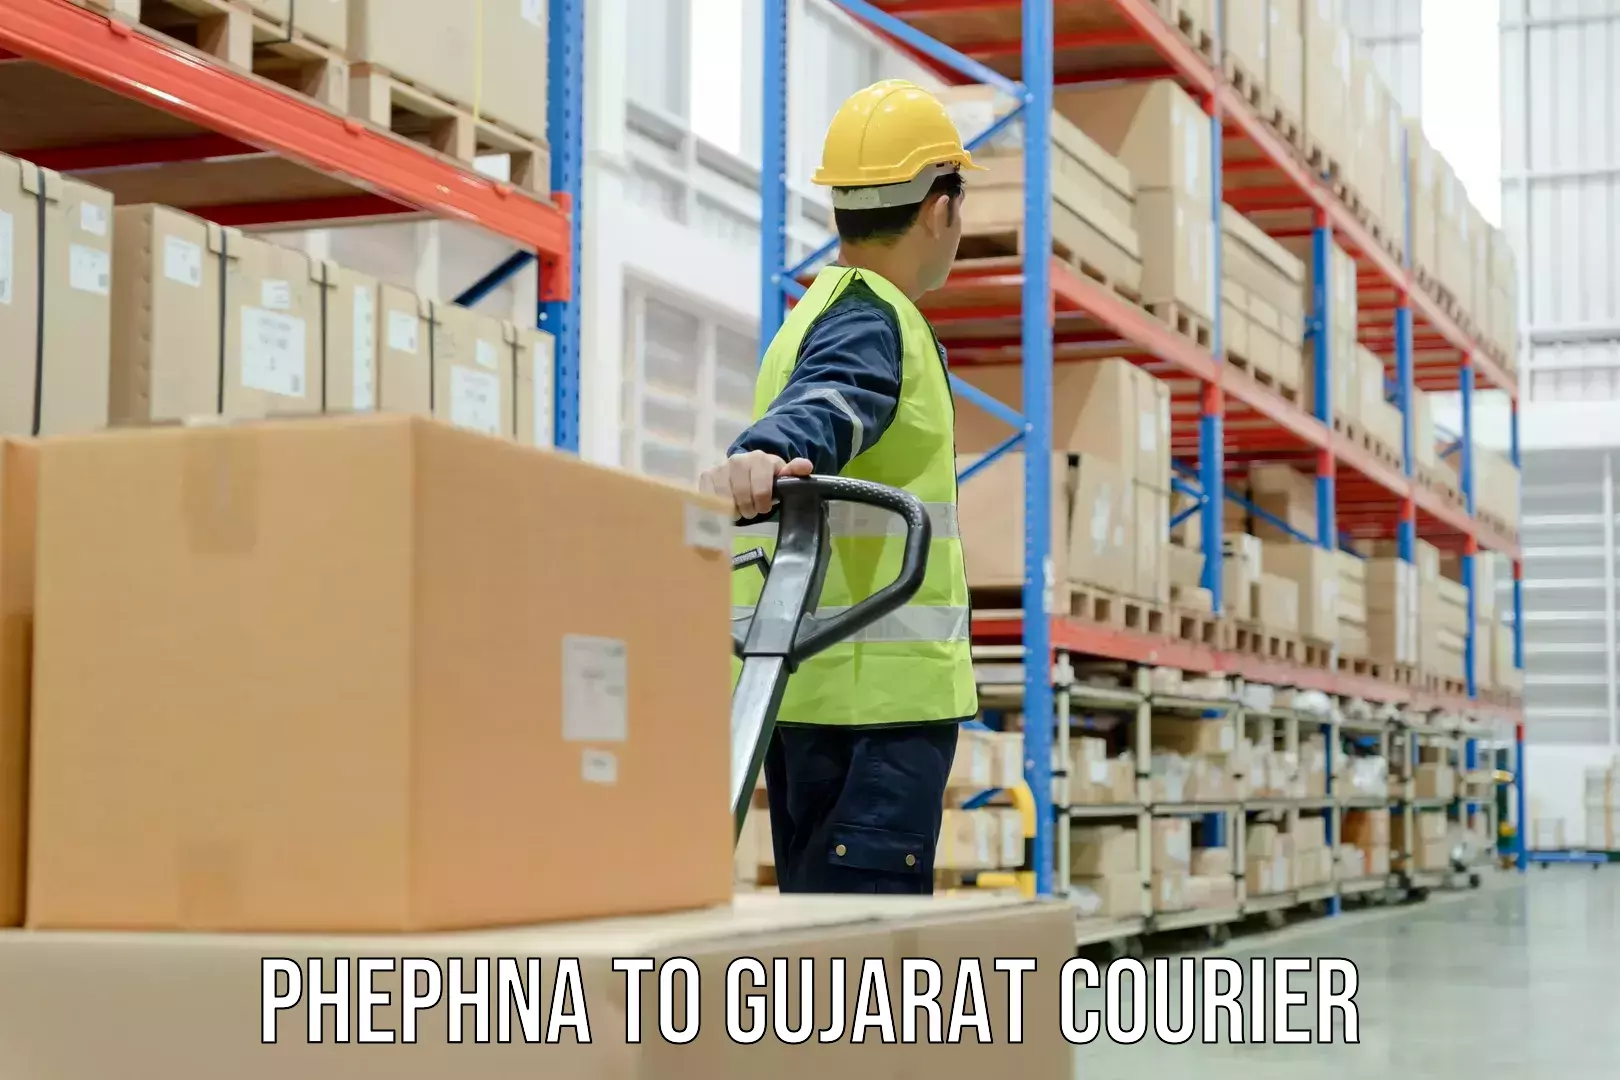 Professional courier services Phephna to Rajkot